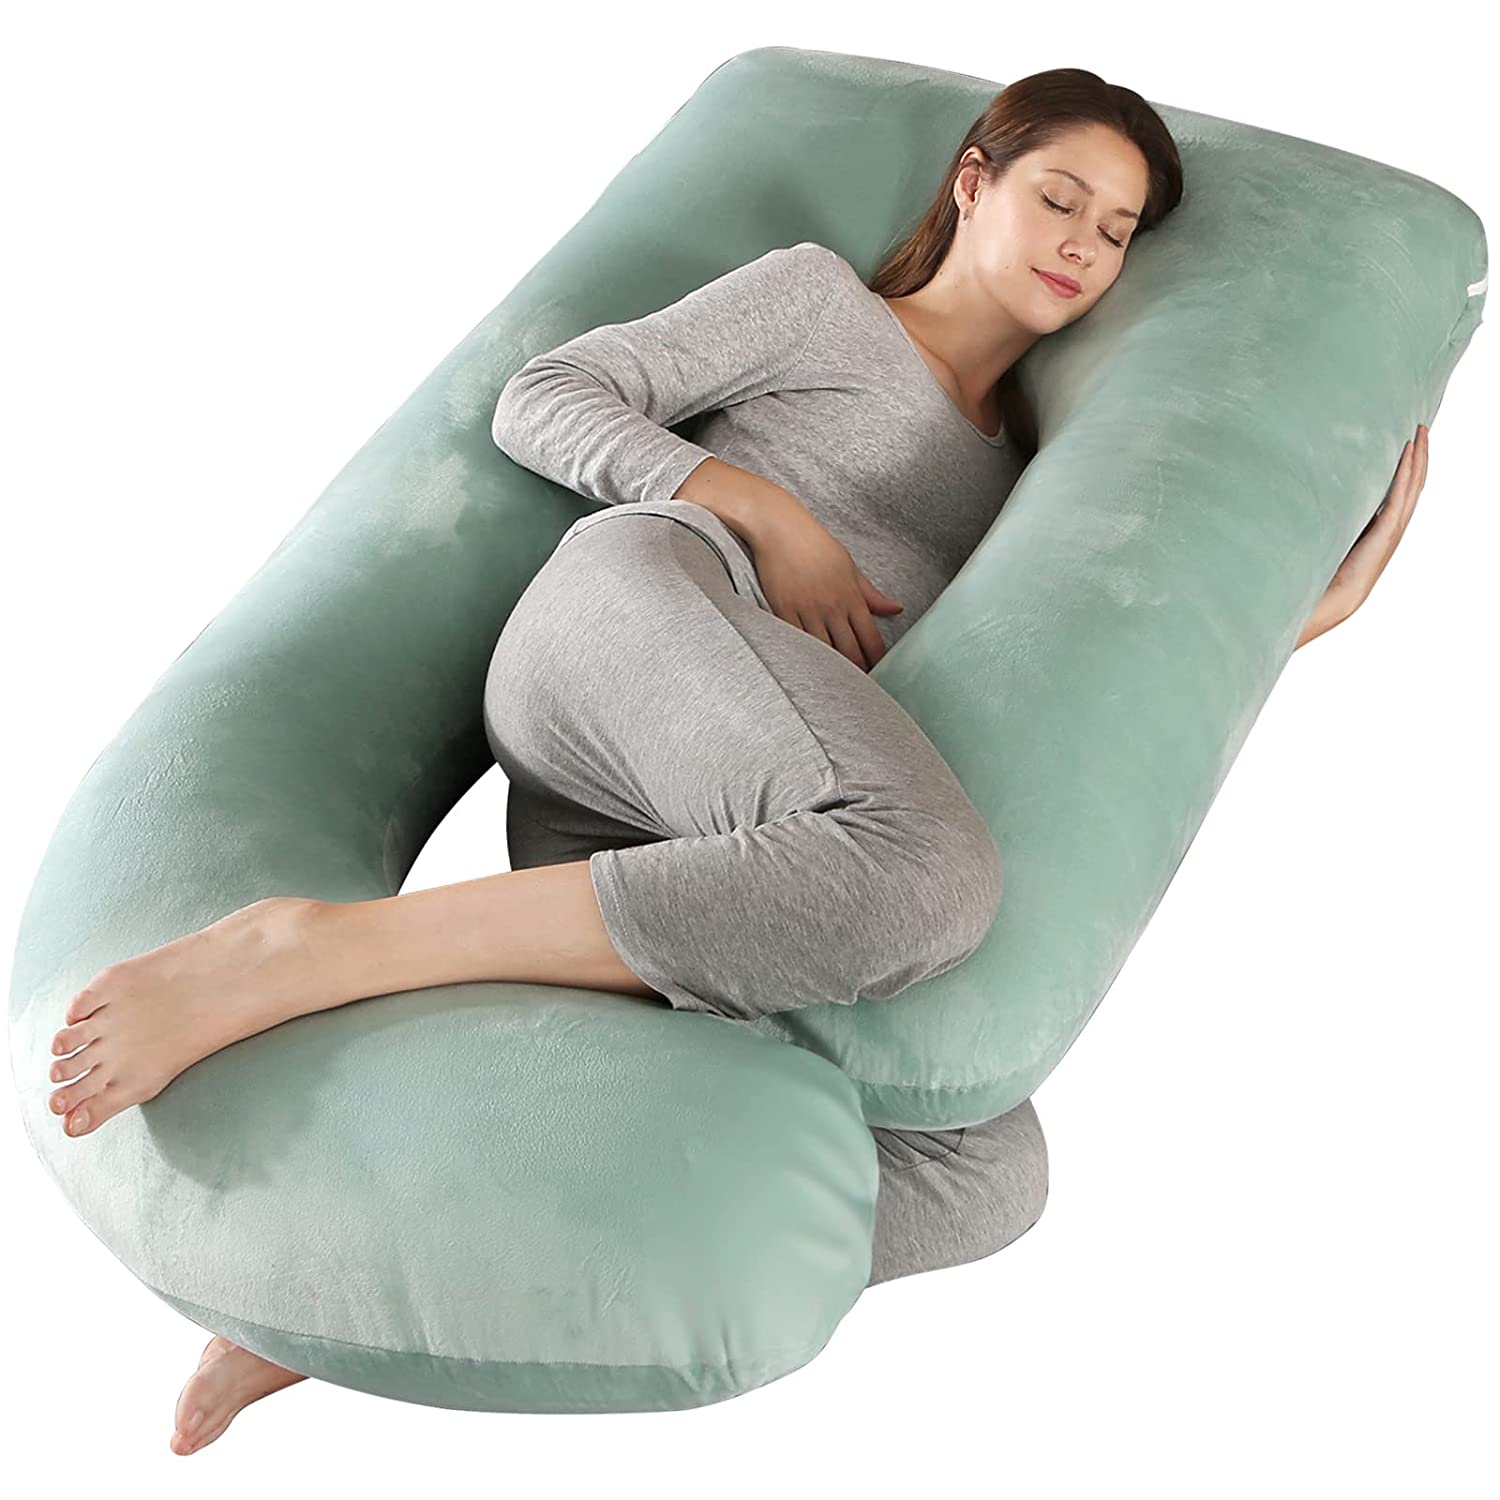 BATTOP Pregnancy Support Pillow